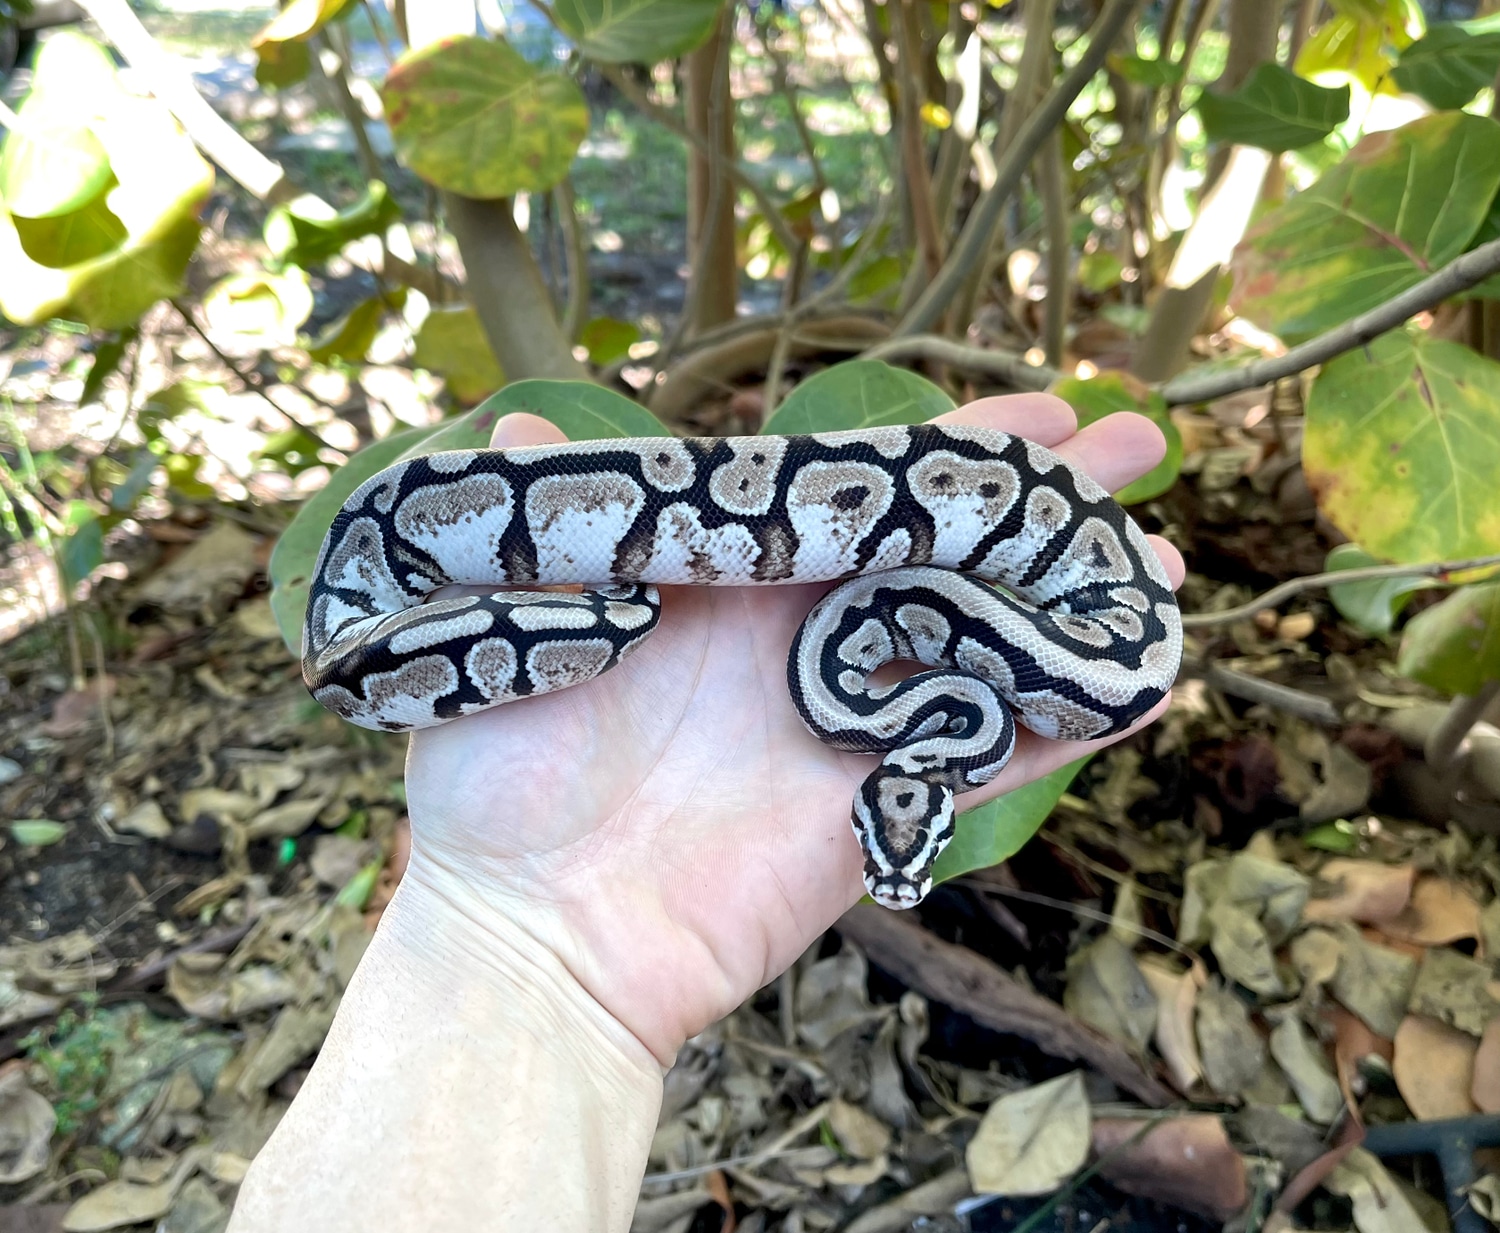 VPI Axanthic Calico Spotnose Ball Python by Adam Chesla Reptiles